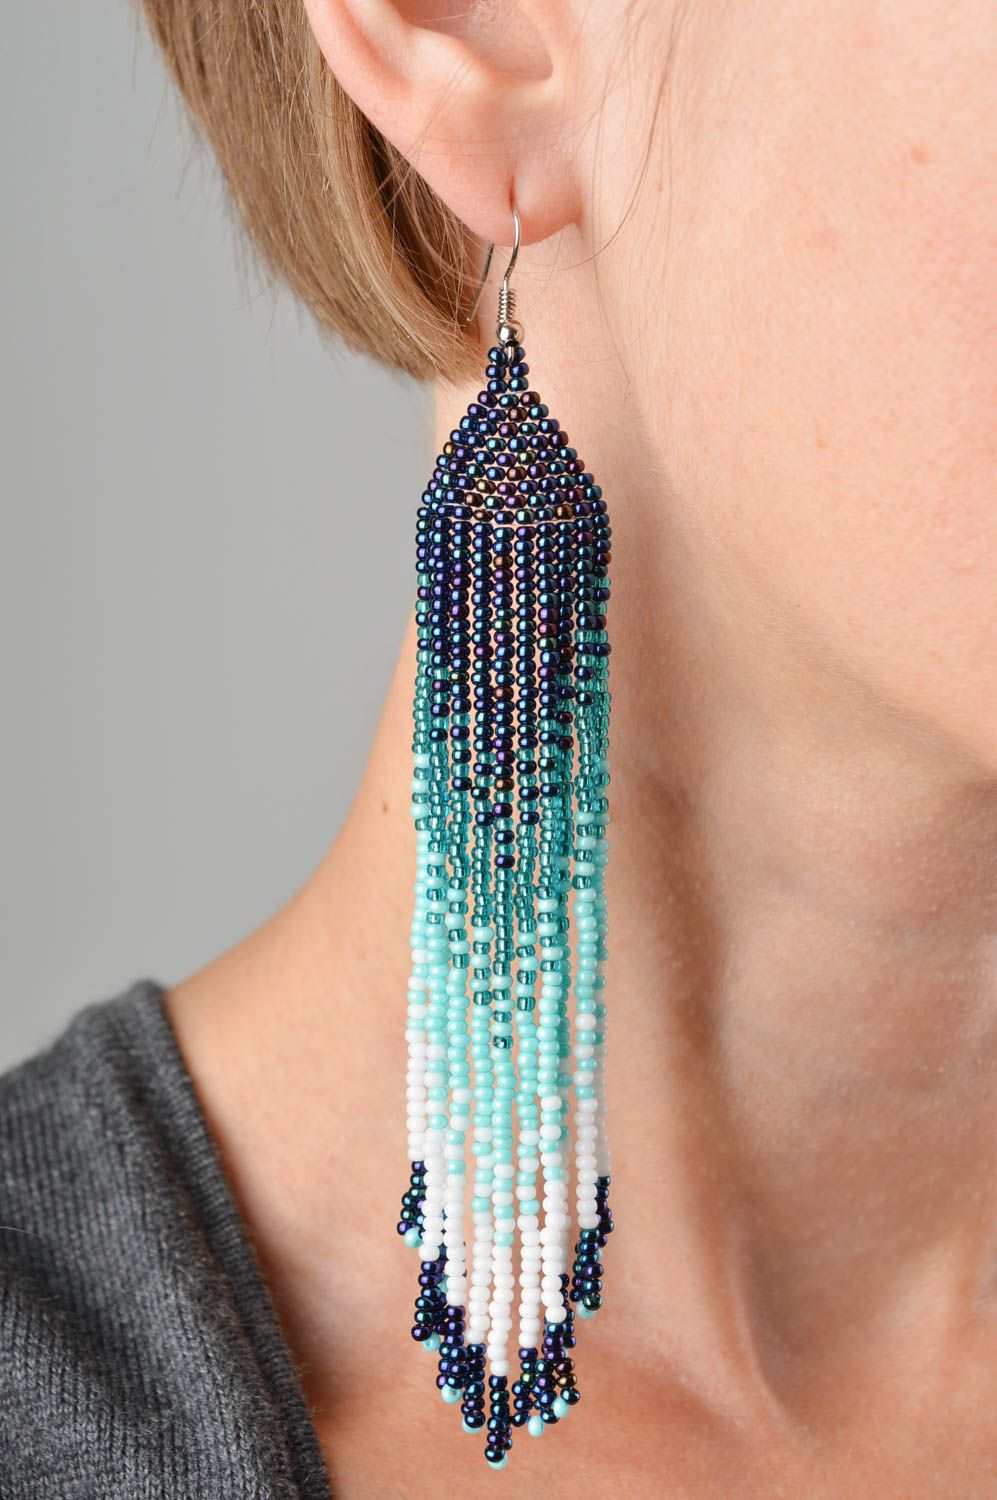 Beaded earrings designer handmade accessories fashion jewelry women gift idea photo 2